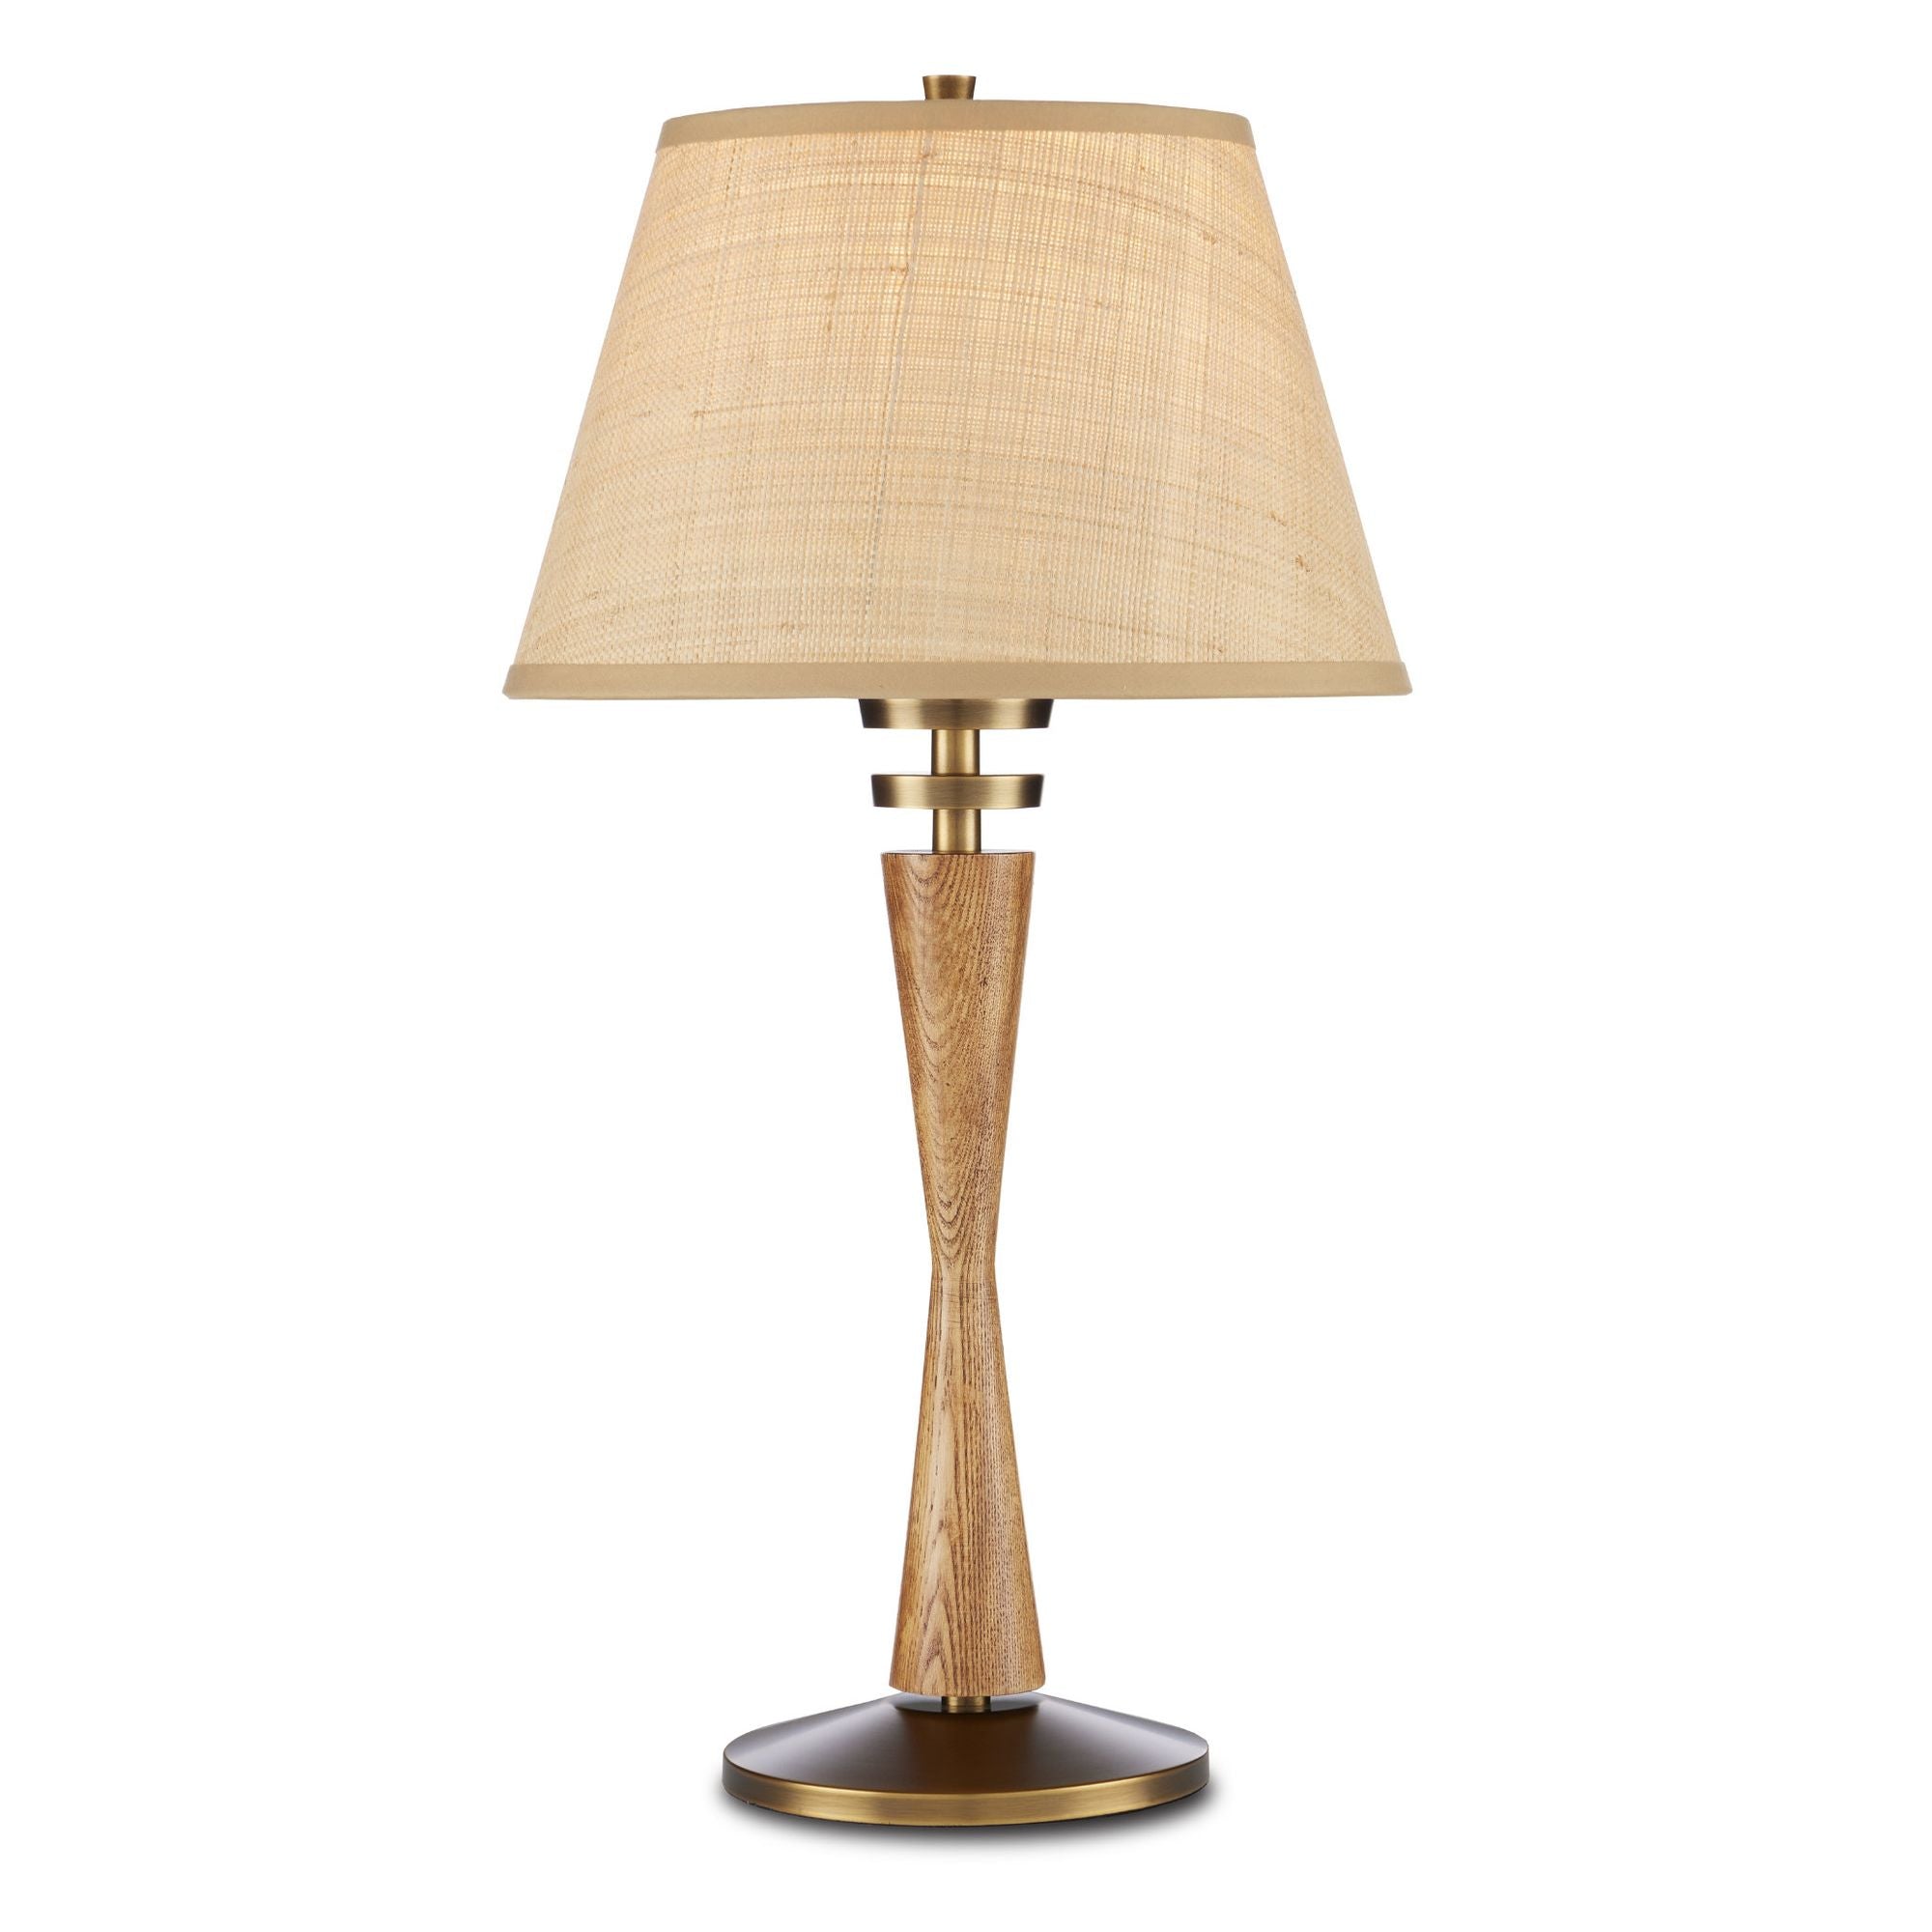 Woodville Table Lamp - Classic Honey/Antique Brass